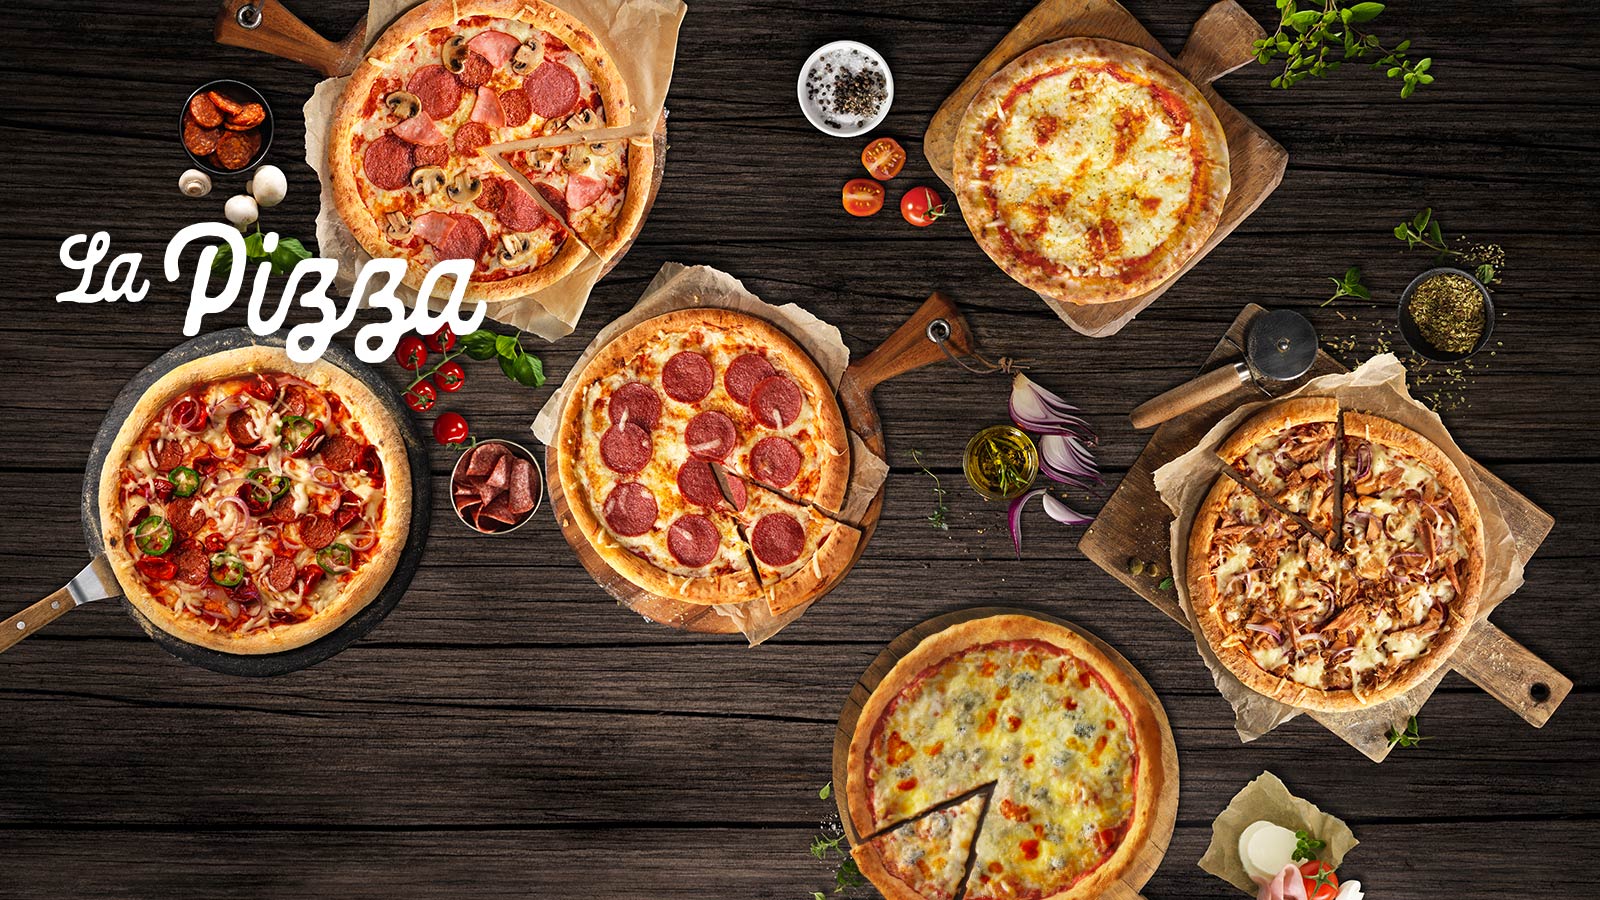 La Pizza- Original Pizza wie in Italien